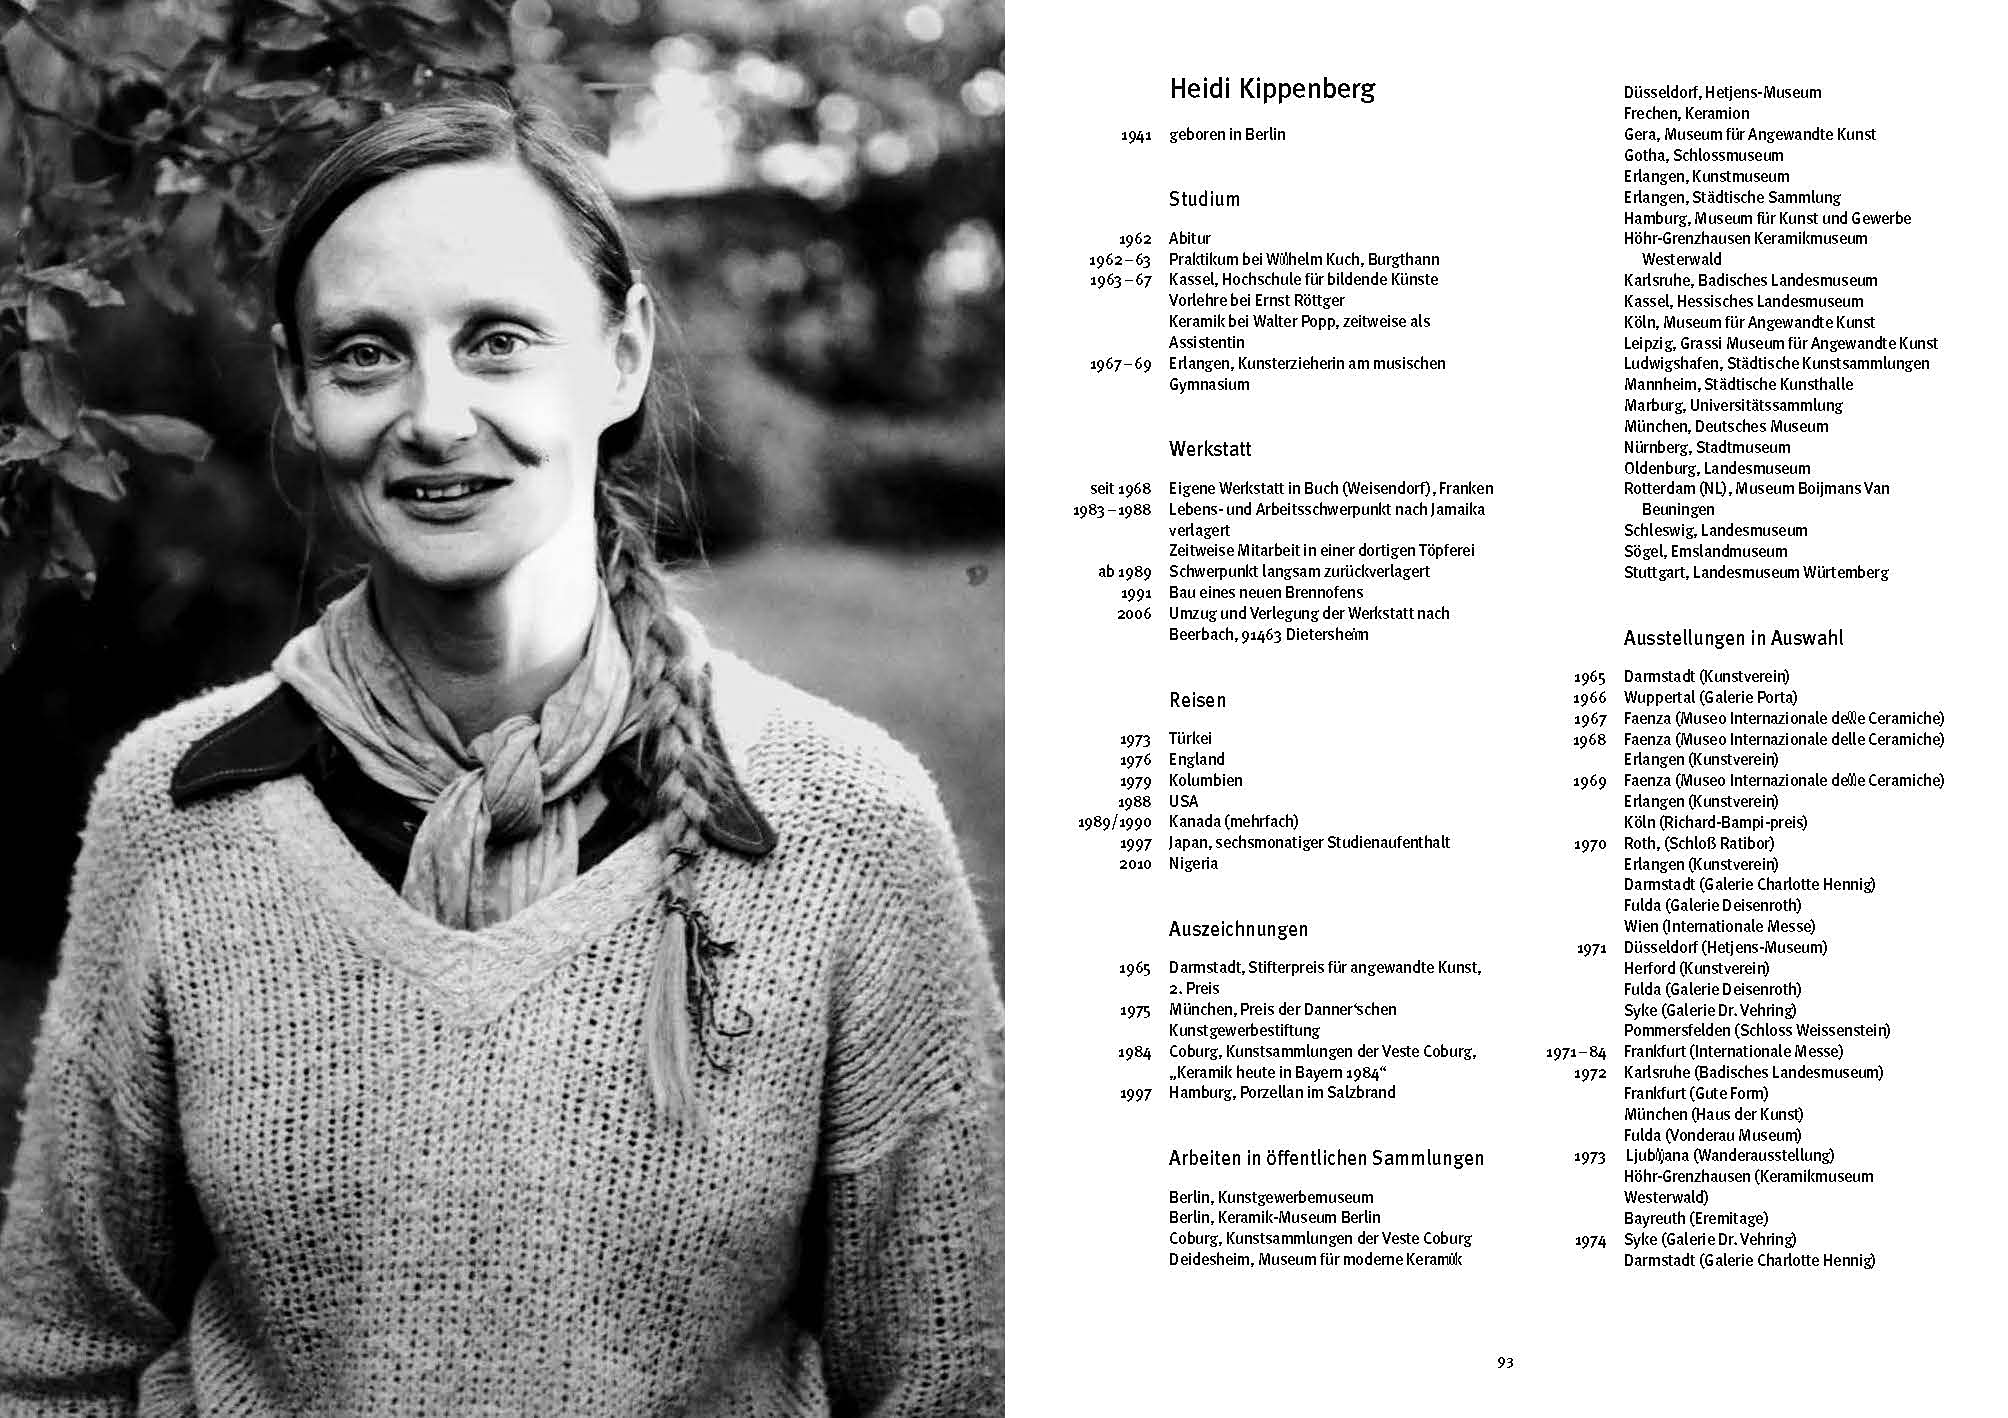 Heidi Kippenberg (German Edition)